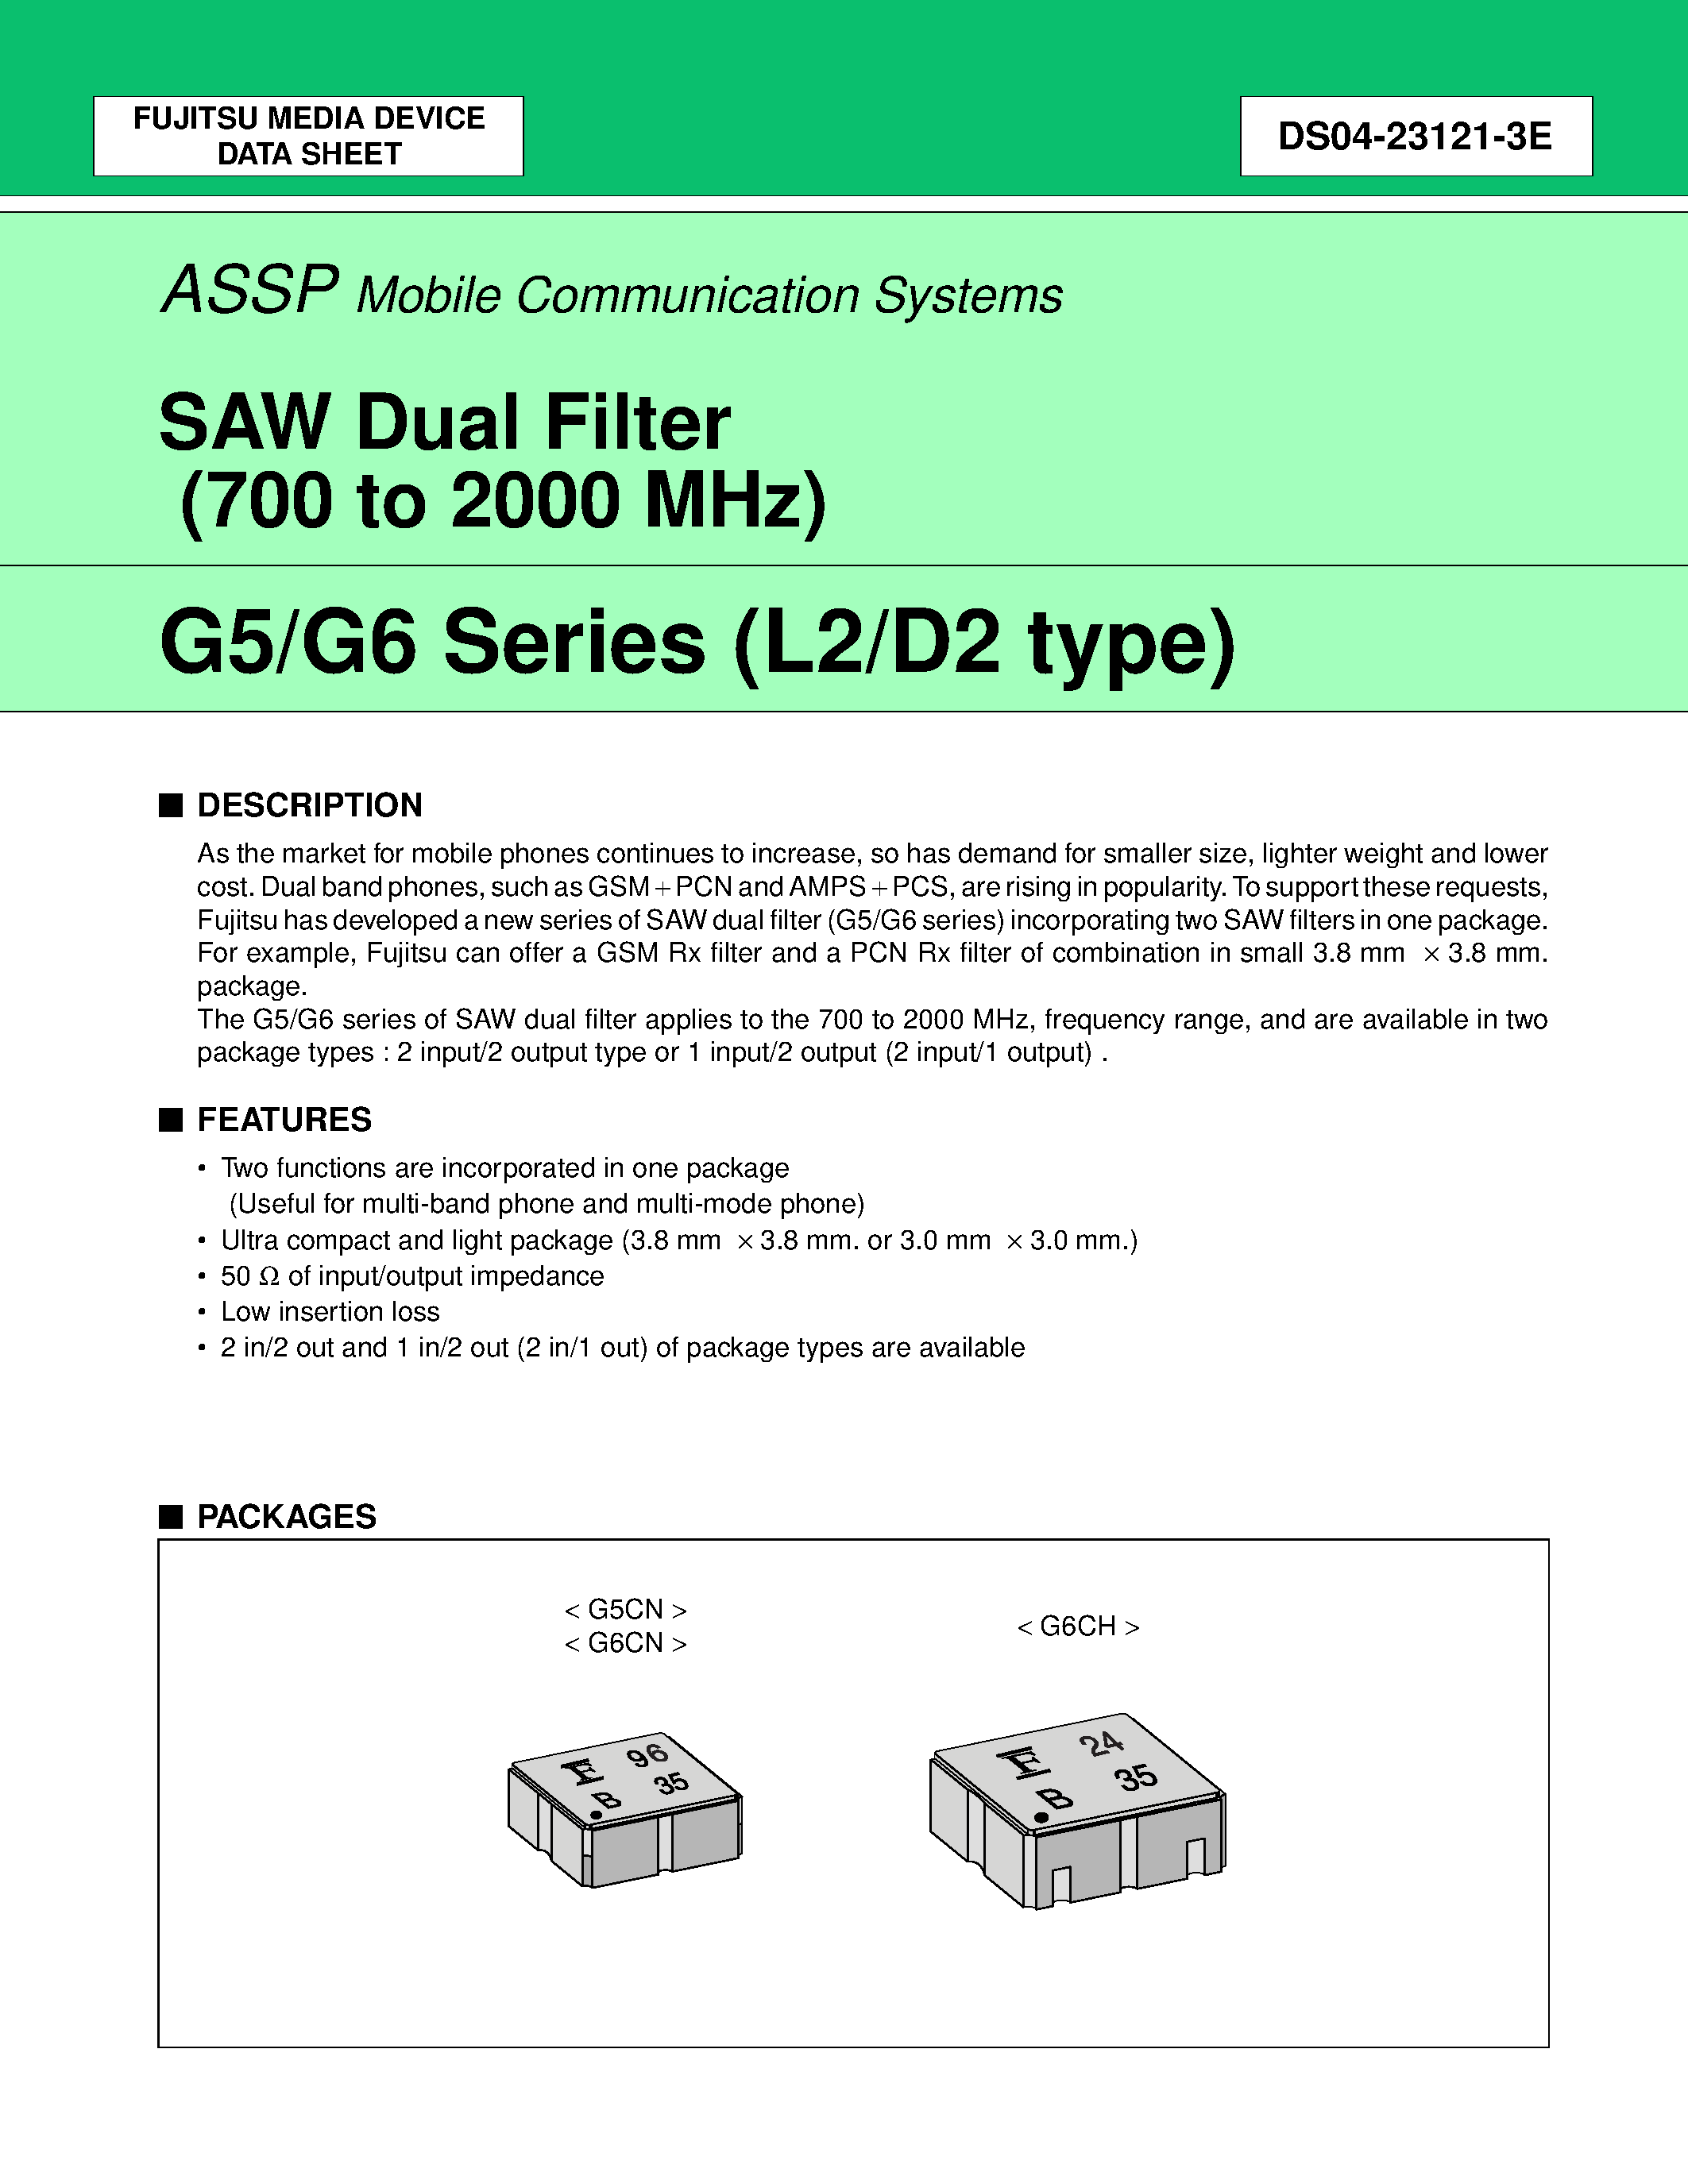 Даташит FAR-G5CN-942M50-D294-V - SAW Dual Filter (700 to 2000 MHz) страница 1